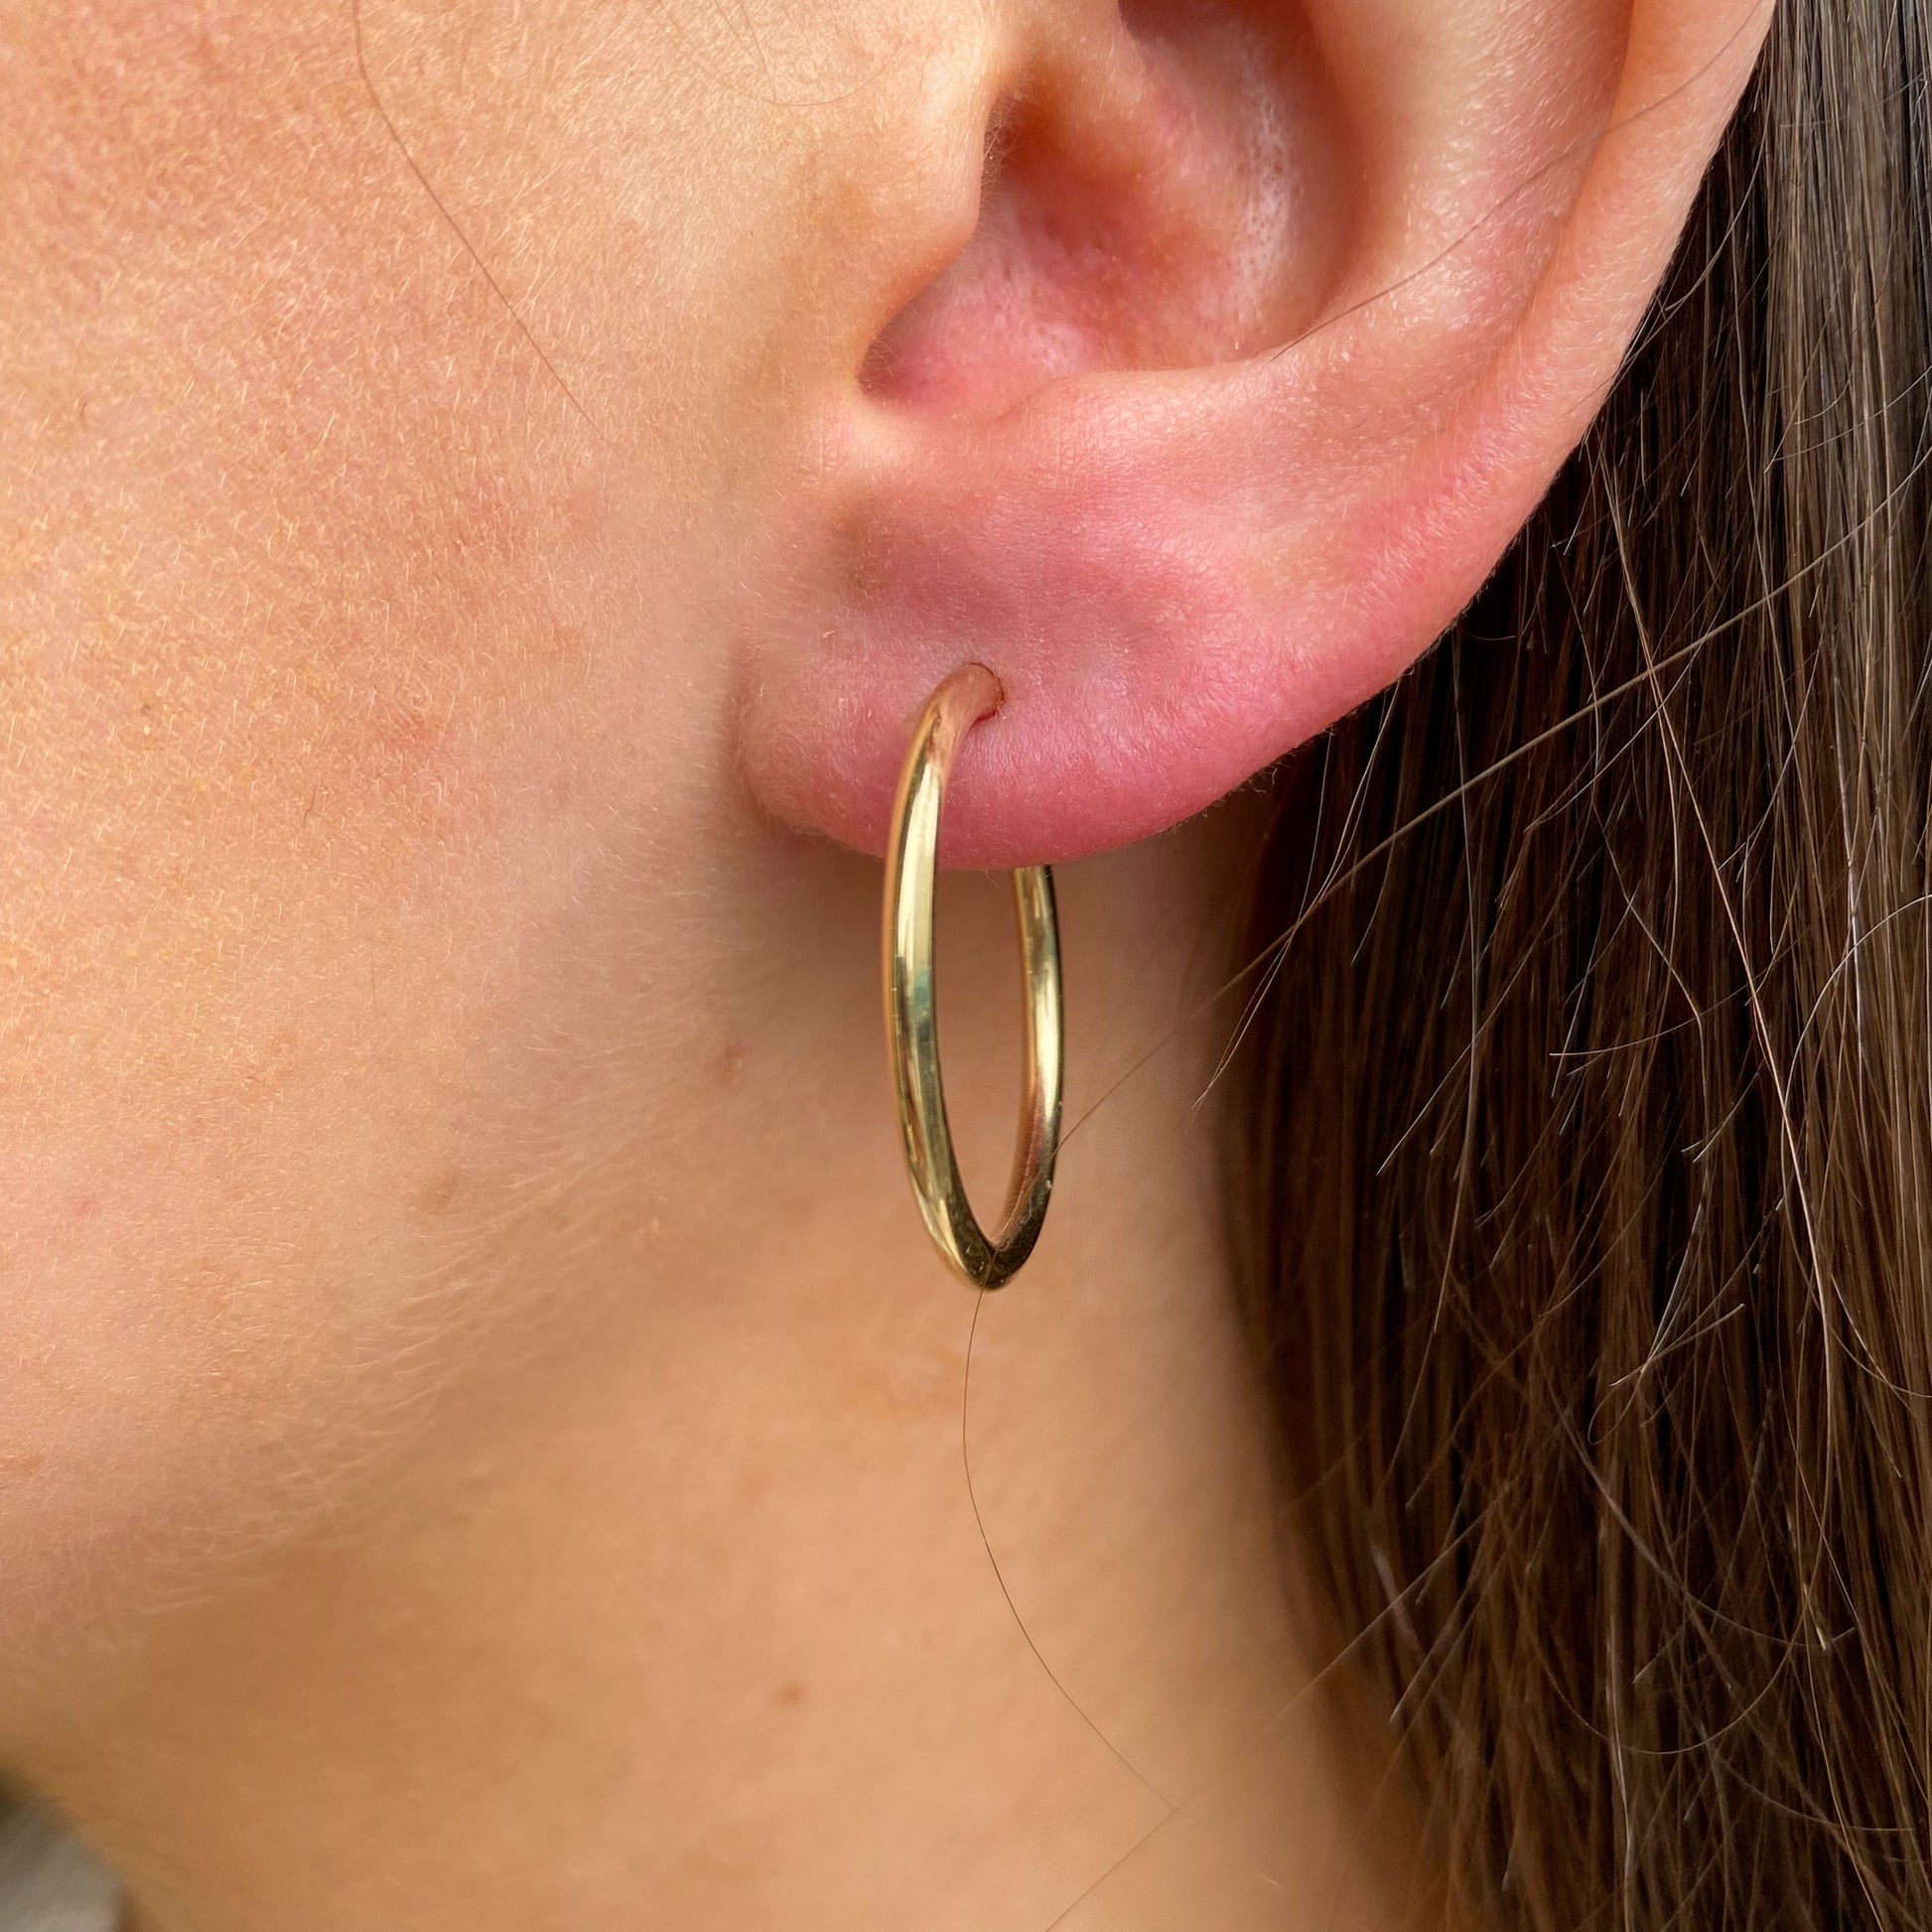 9ct Gold Skinny Oval Hoop Earrings - John Ross Jewellers